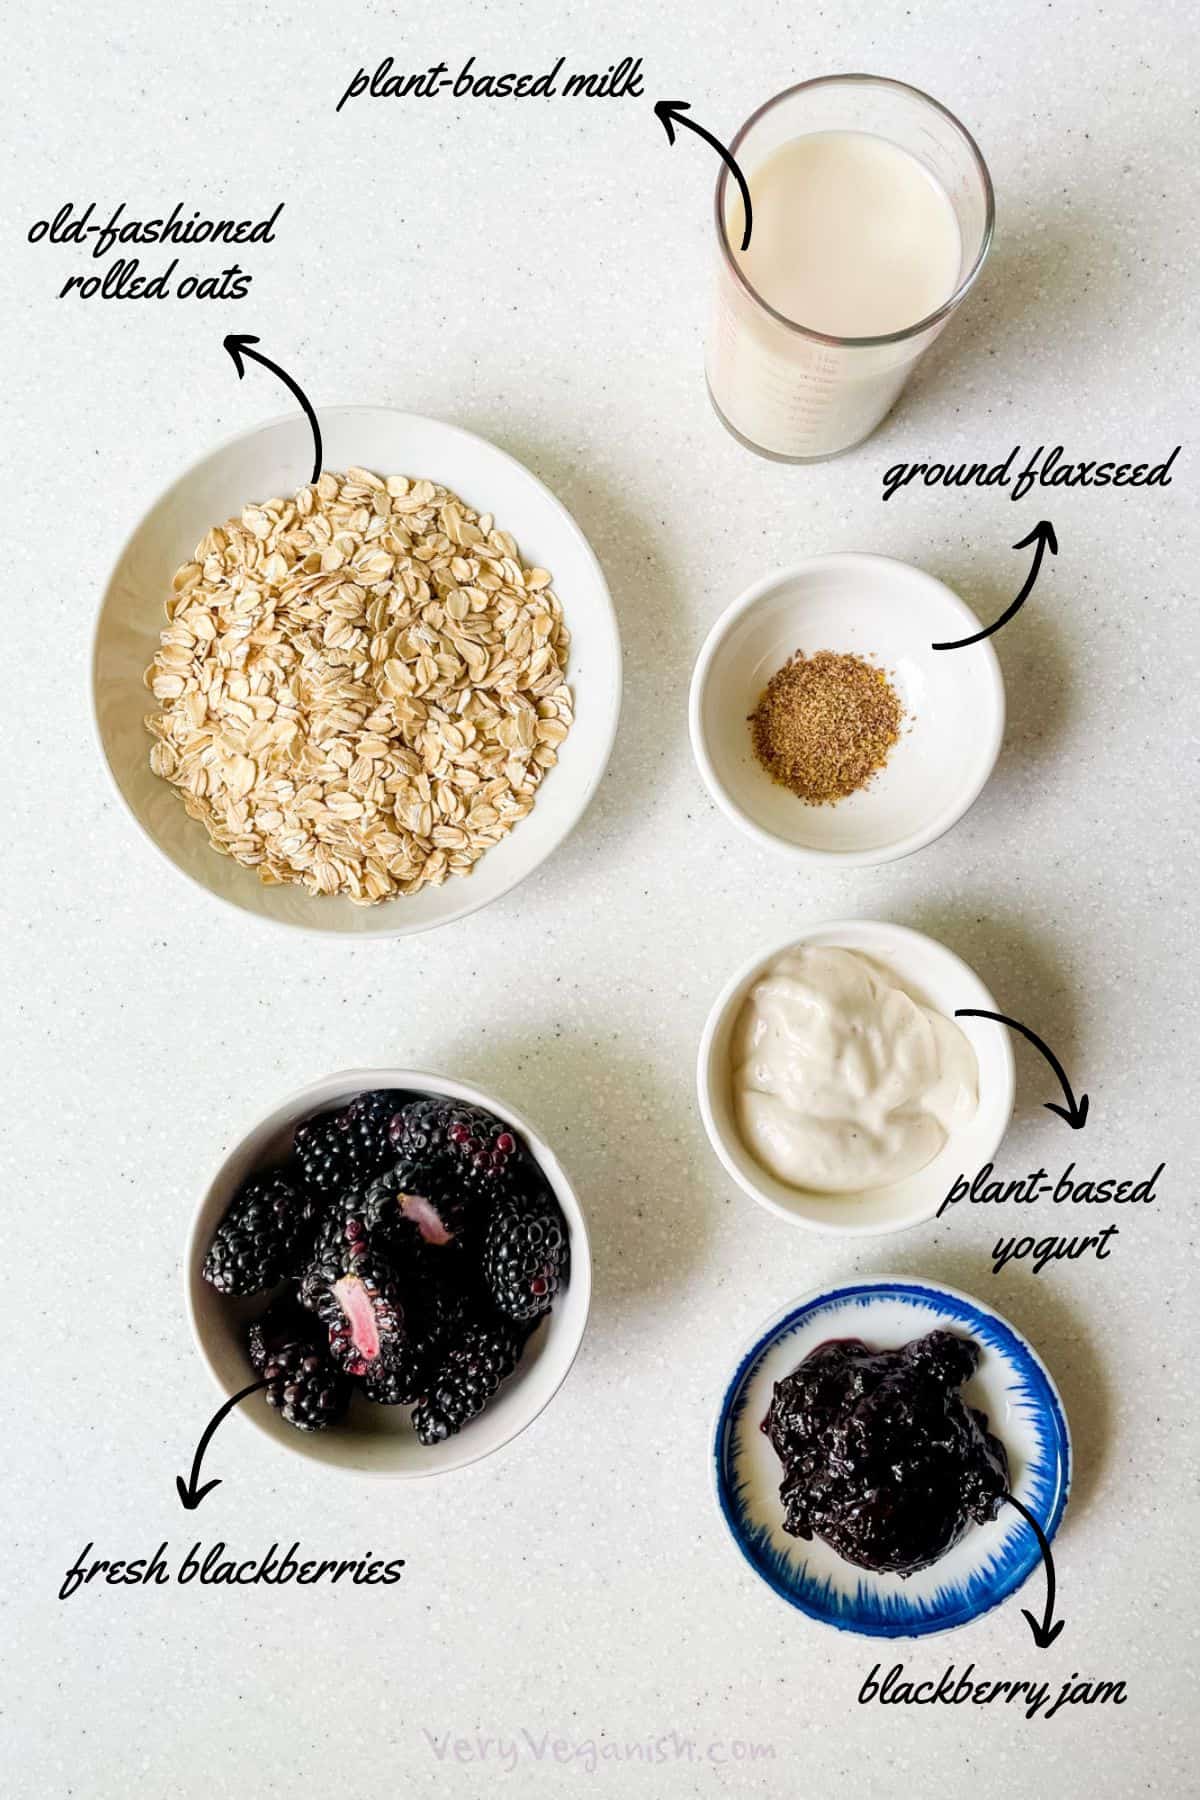 Ingredients for blackberry overnight oats: rolled oats, plant-based milk, ground flaxseed, plant-based yogurt, blackberry jam, fresh or frozen blackberries